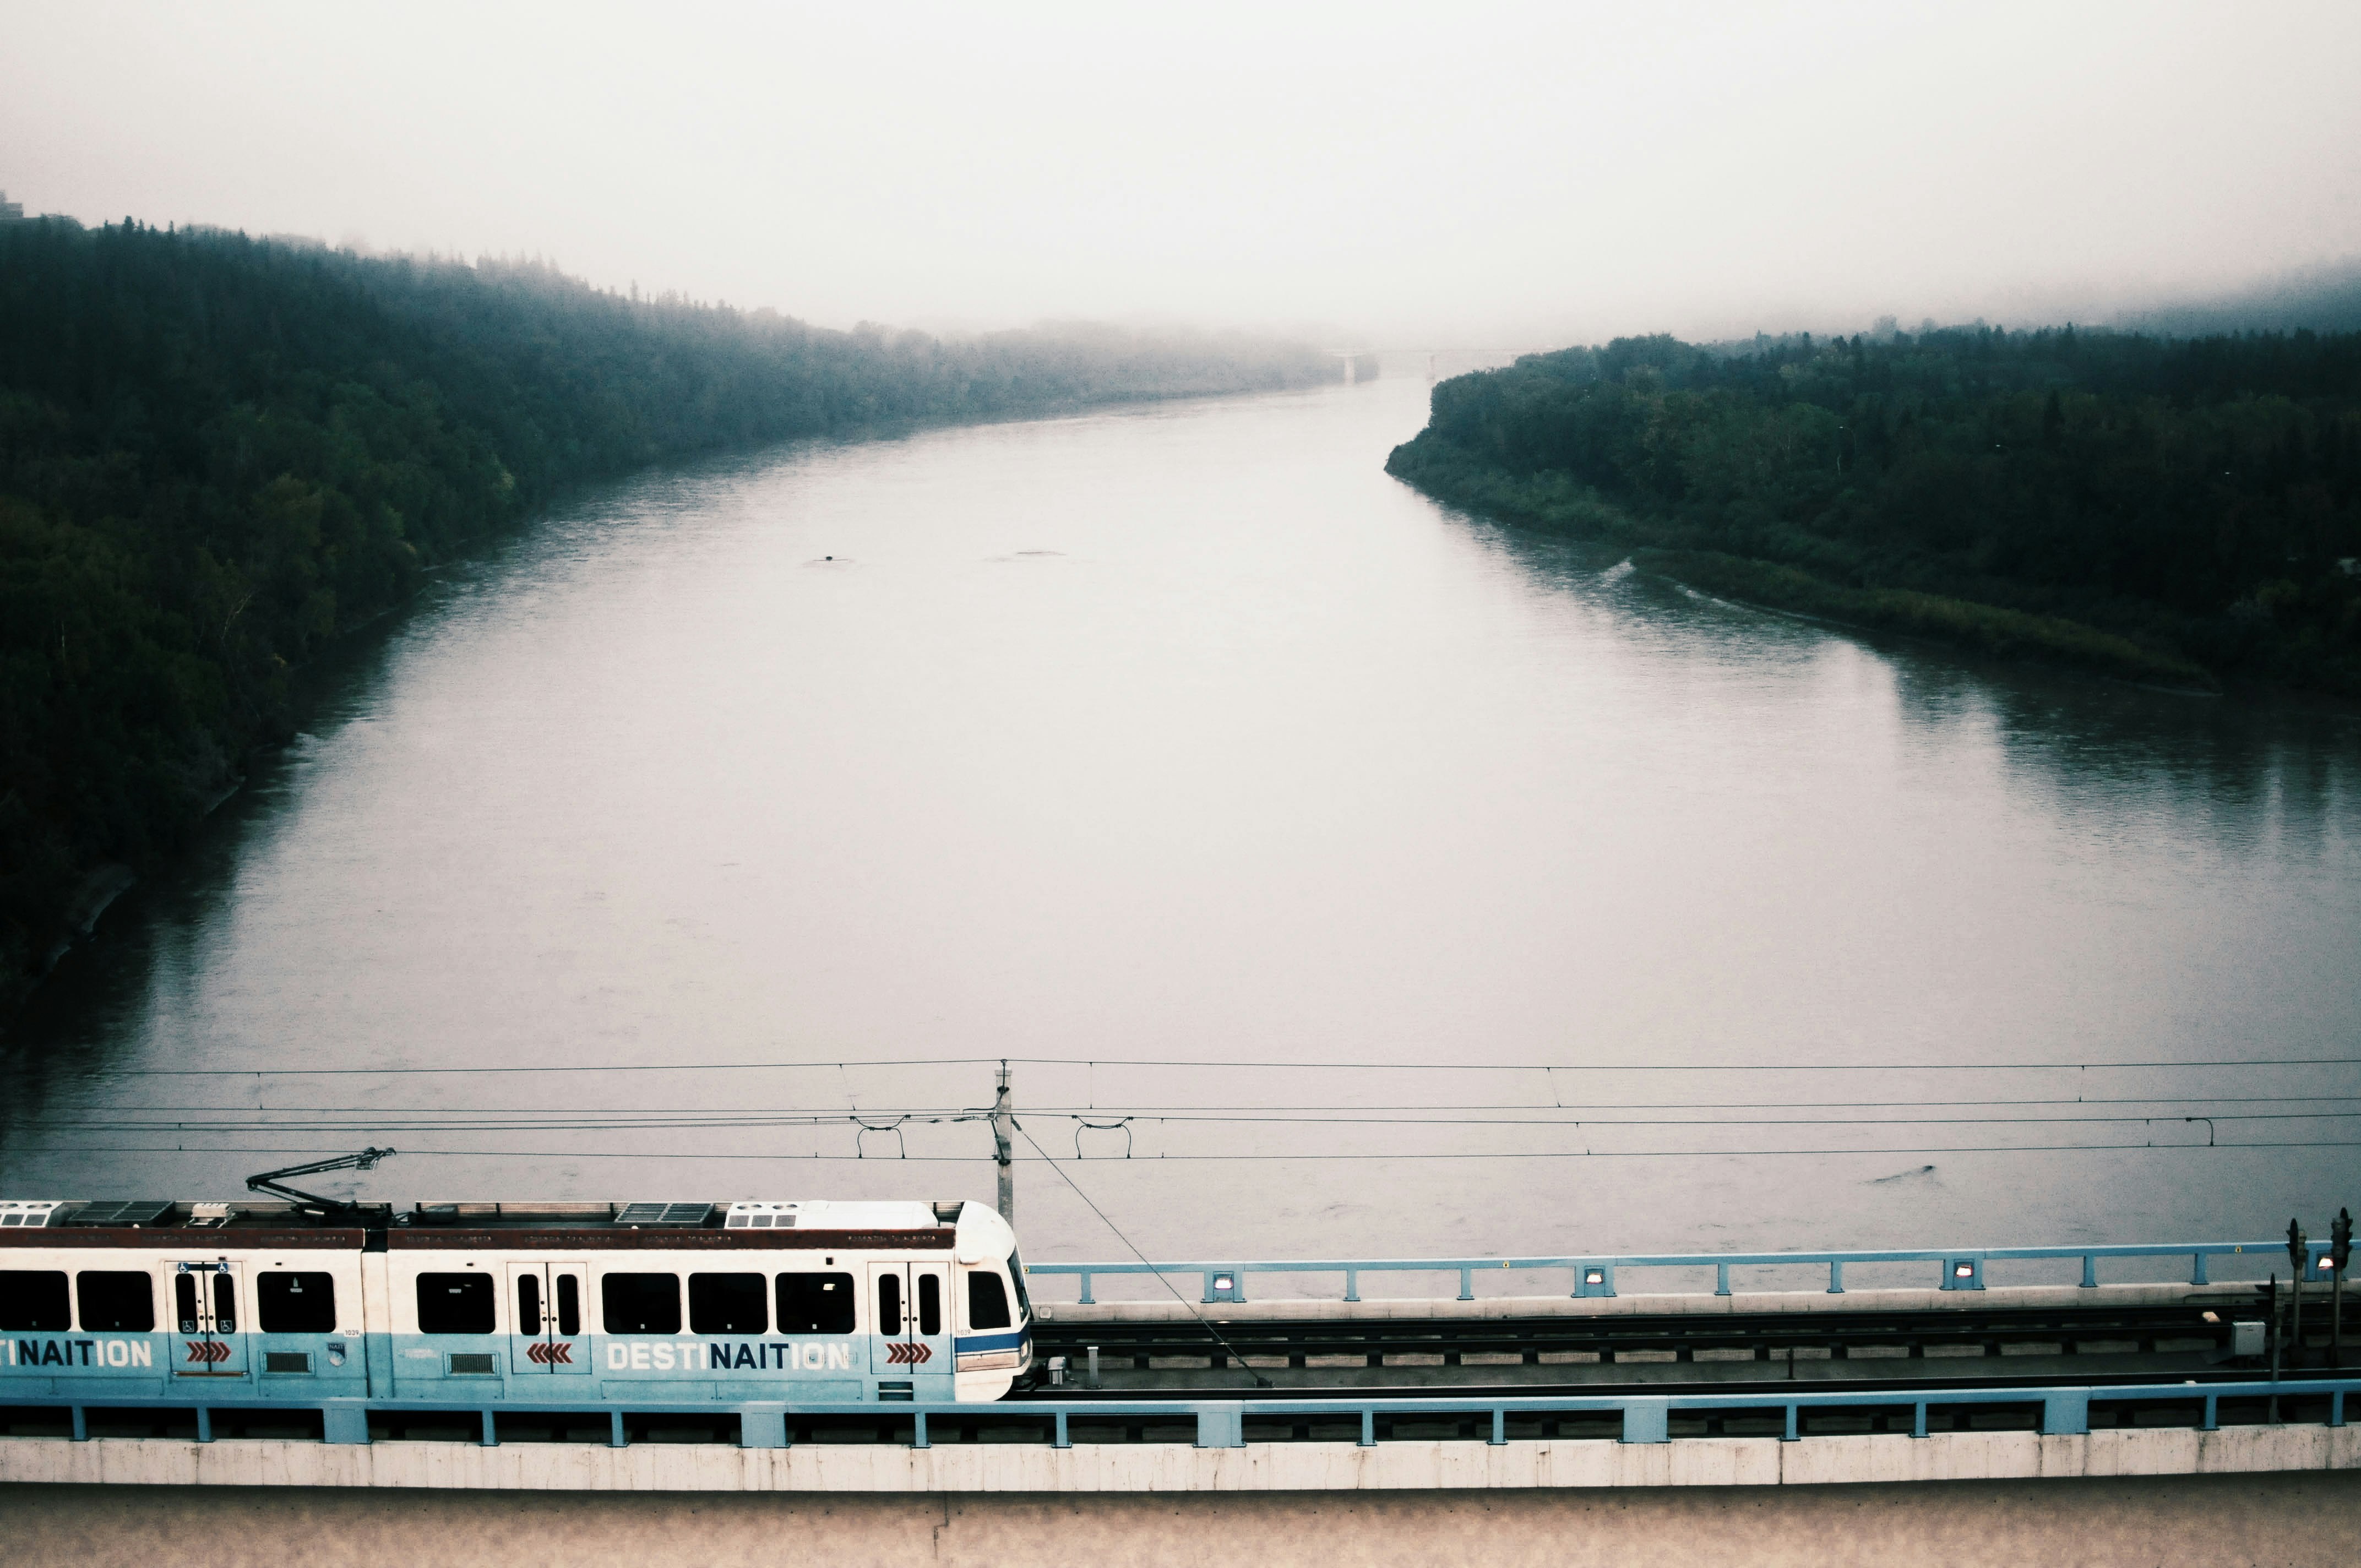 white train on bridge over river during daytime